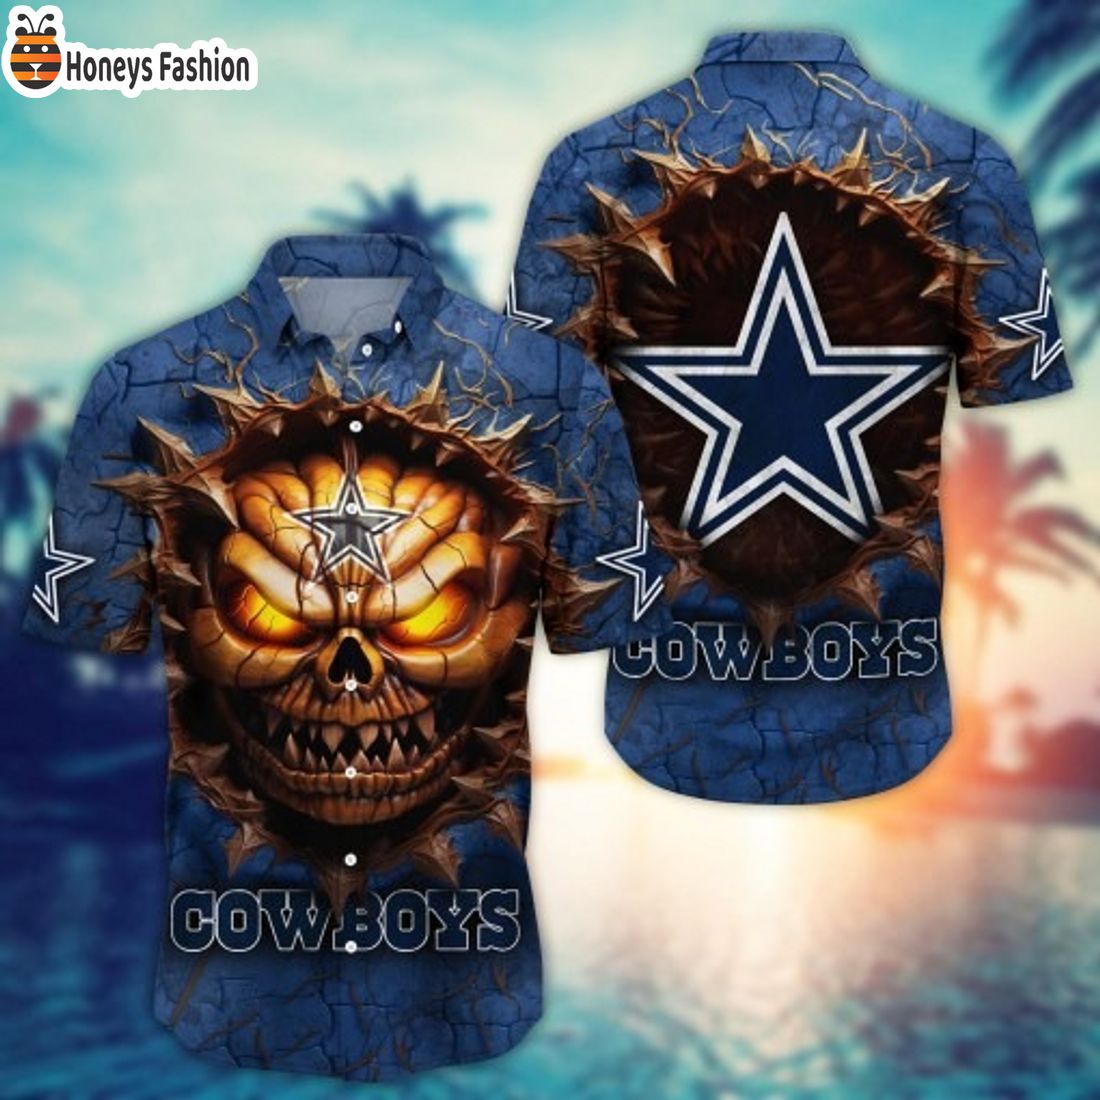 NFL Dallas Cowboys Hawaiian Shirt